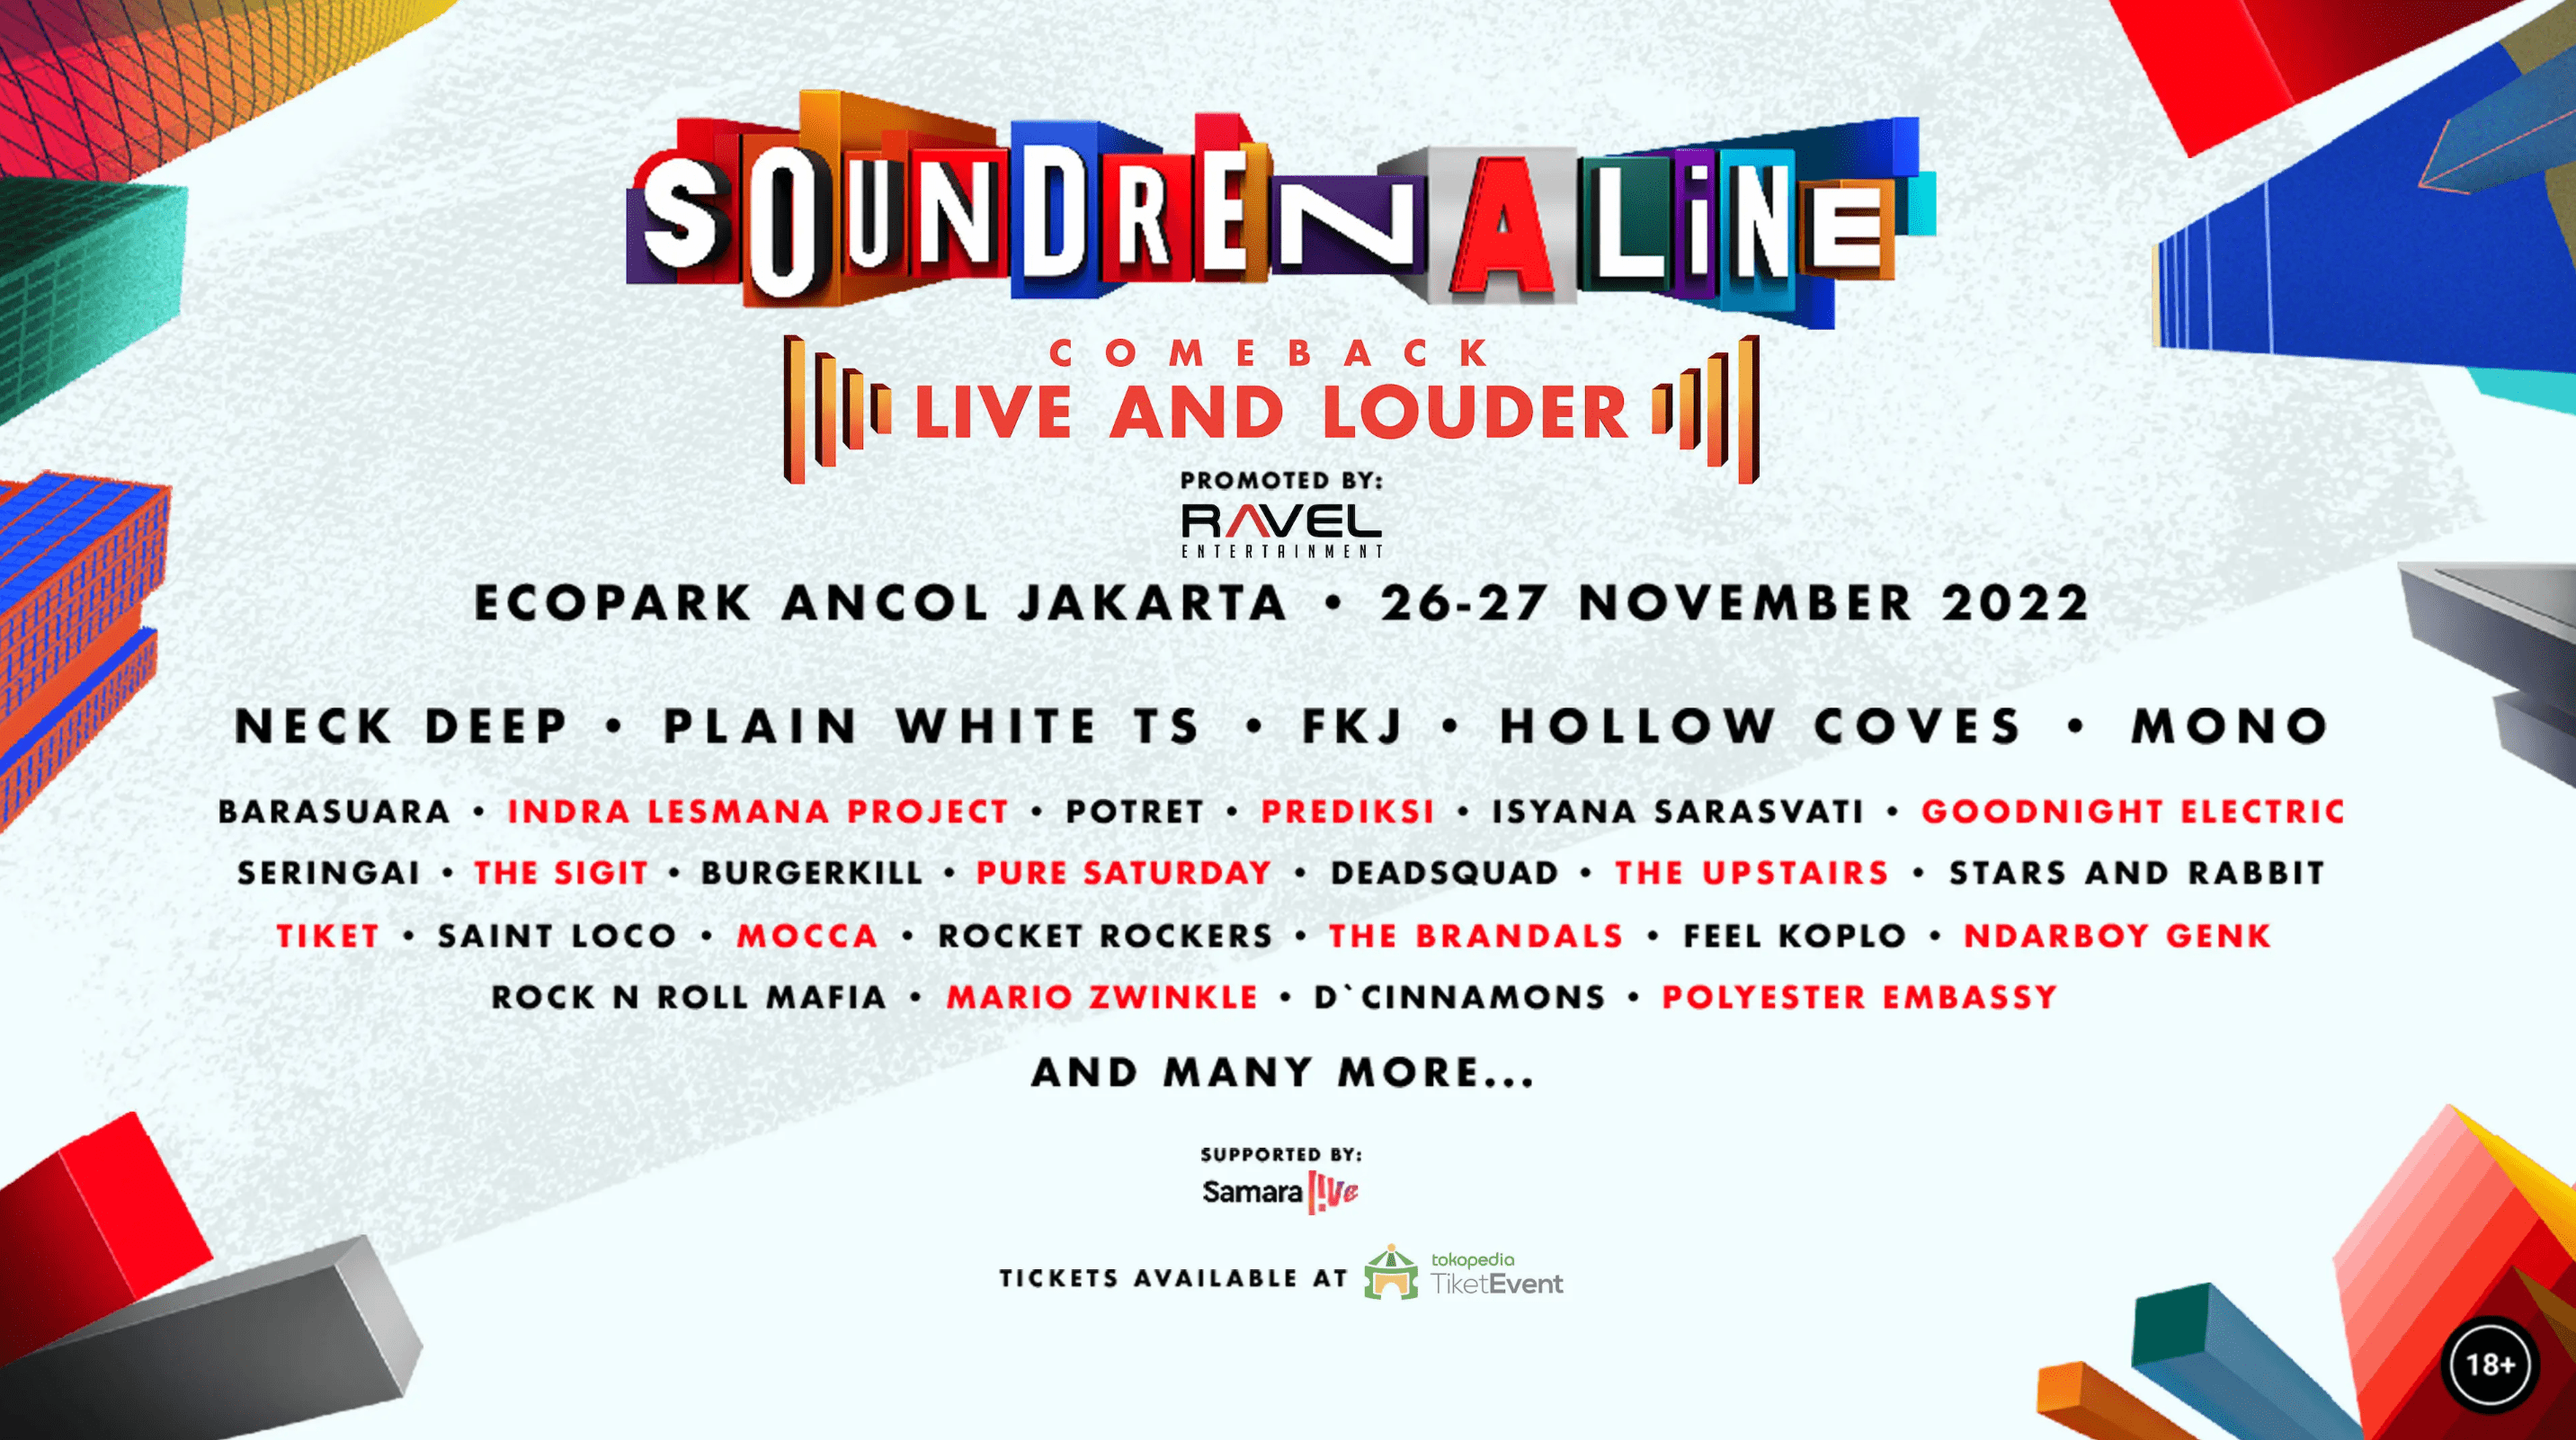 Agenda Soundrenaline 2022/soundrenaline